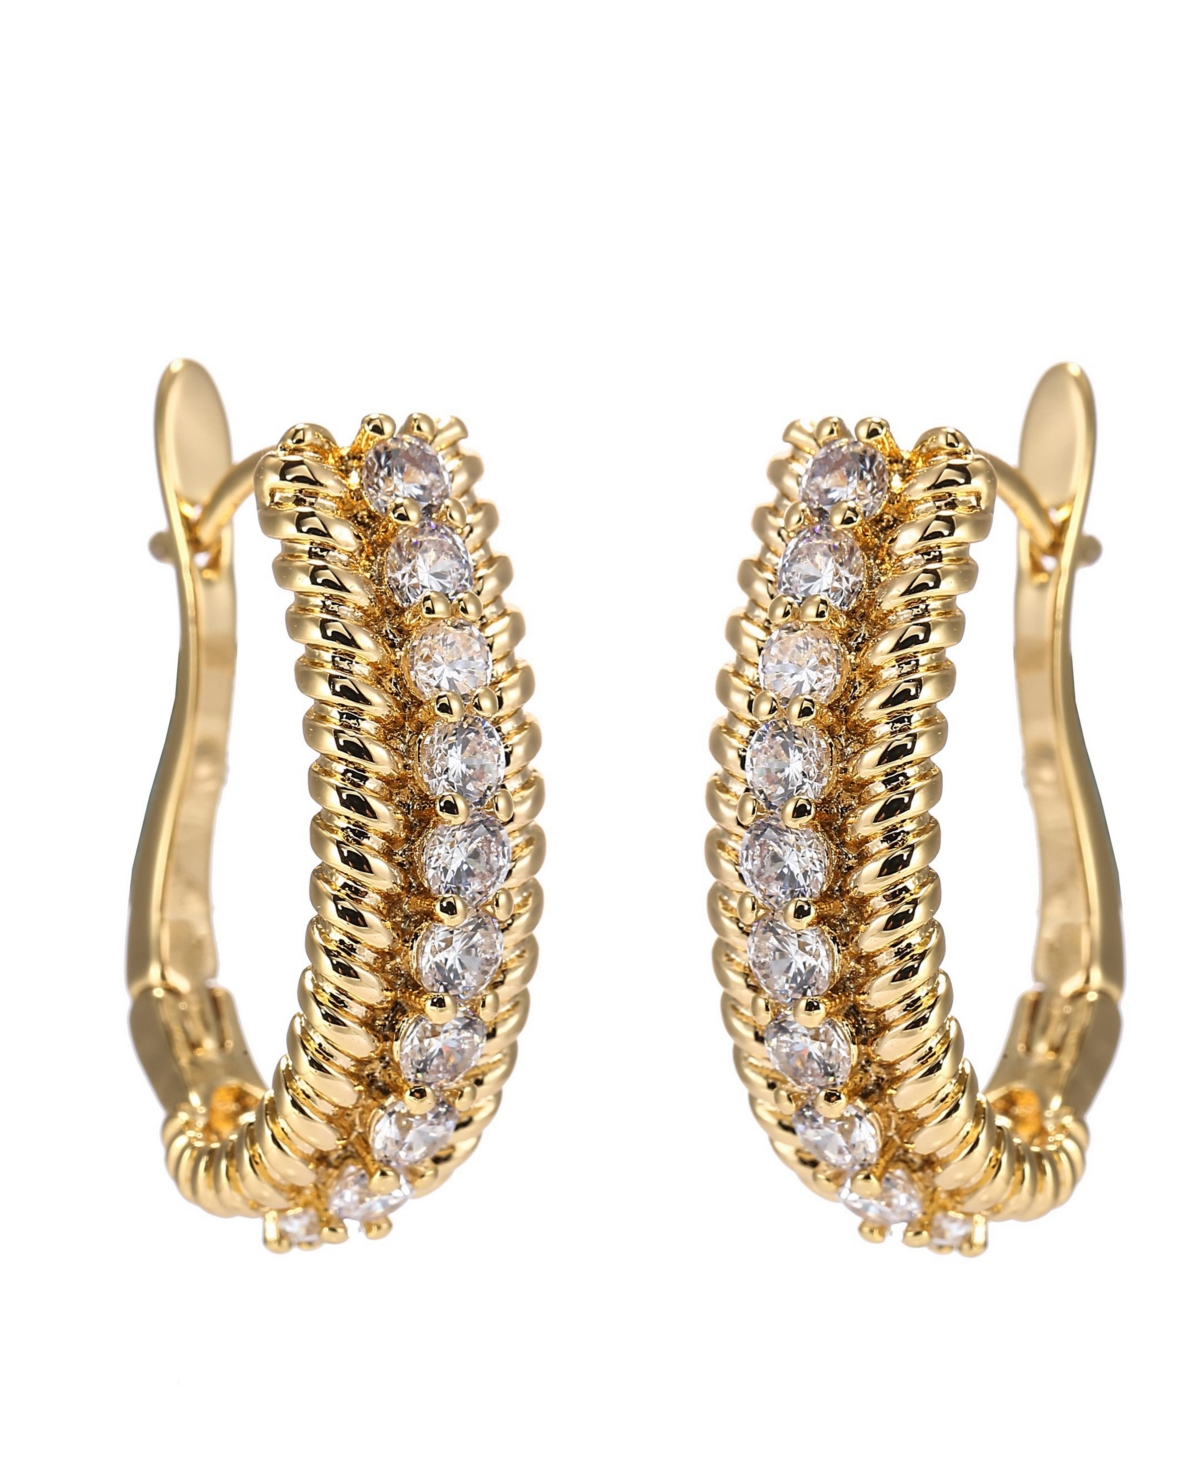 A & M Gold-Tone Ribbed Huggie Earrings